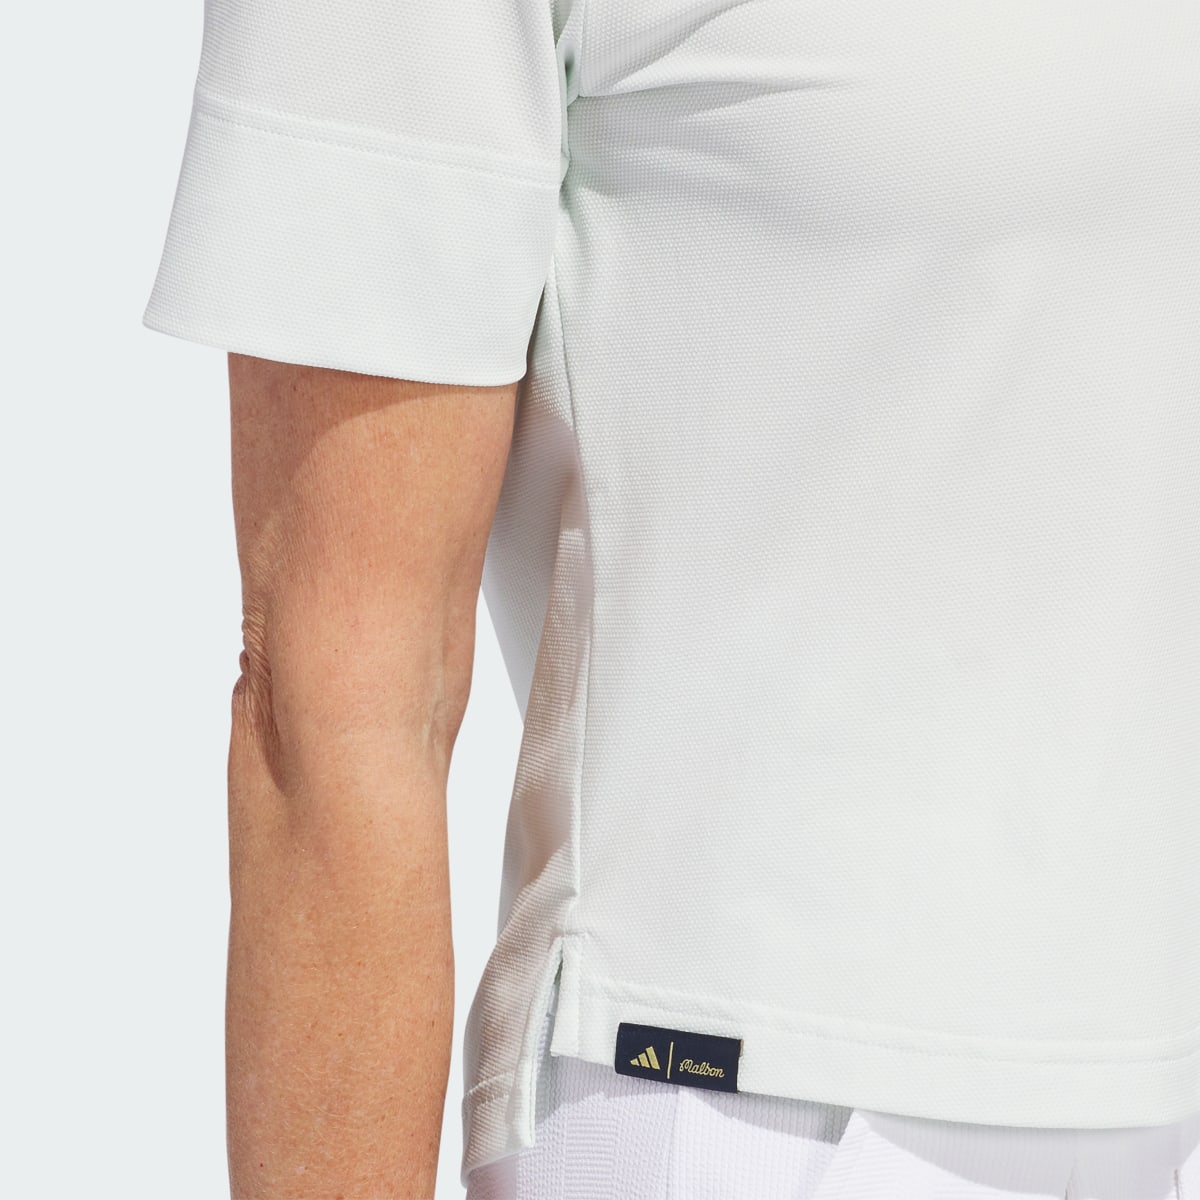 Adidas x Malbon Polo Shirt. 9